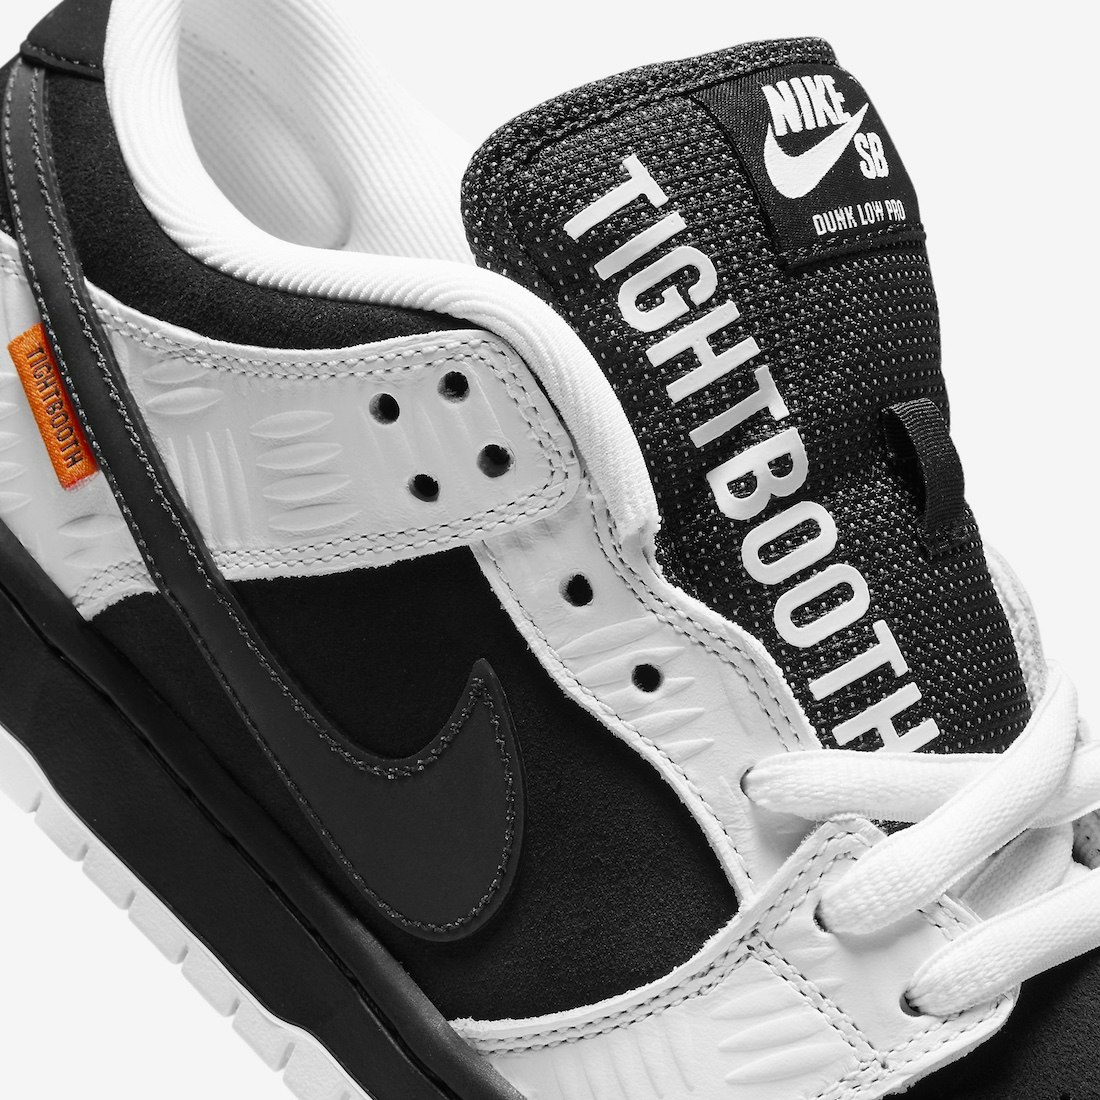 TIGHTBOOTH x Nike SB Dunk Low "Black/White"